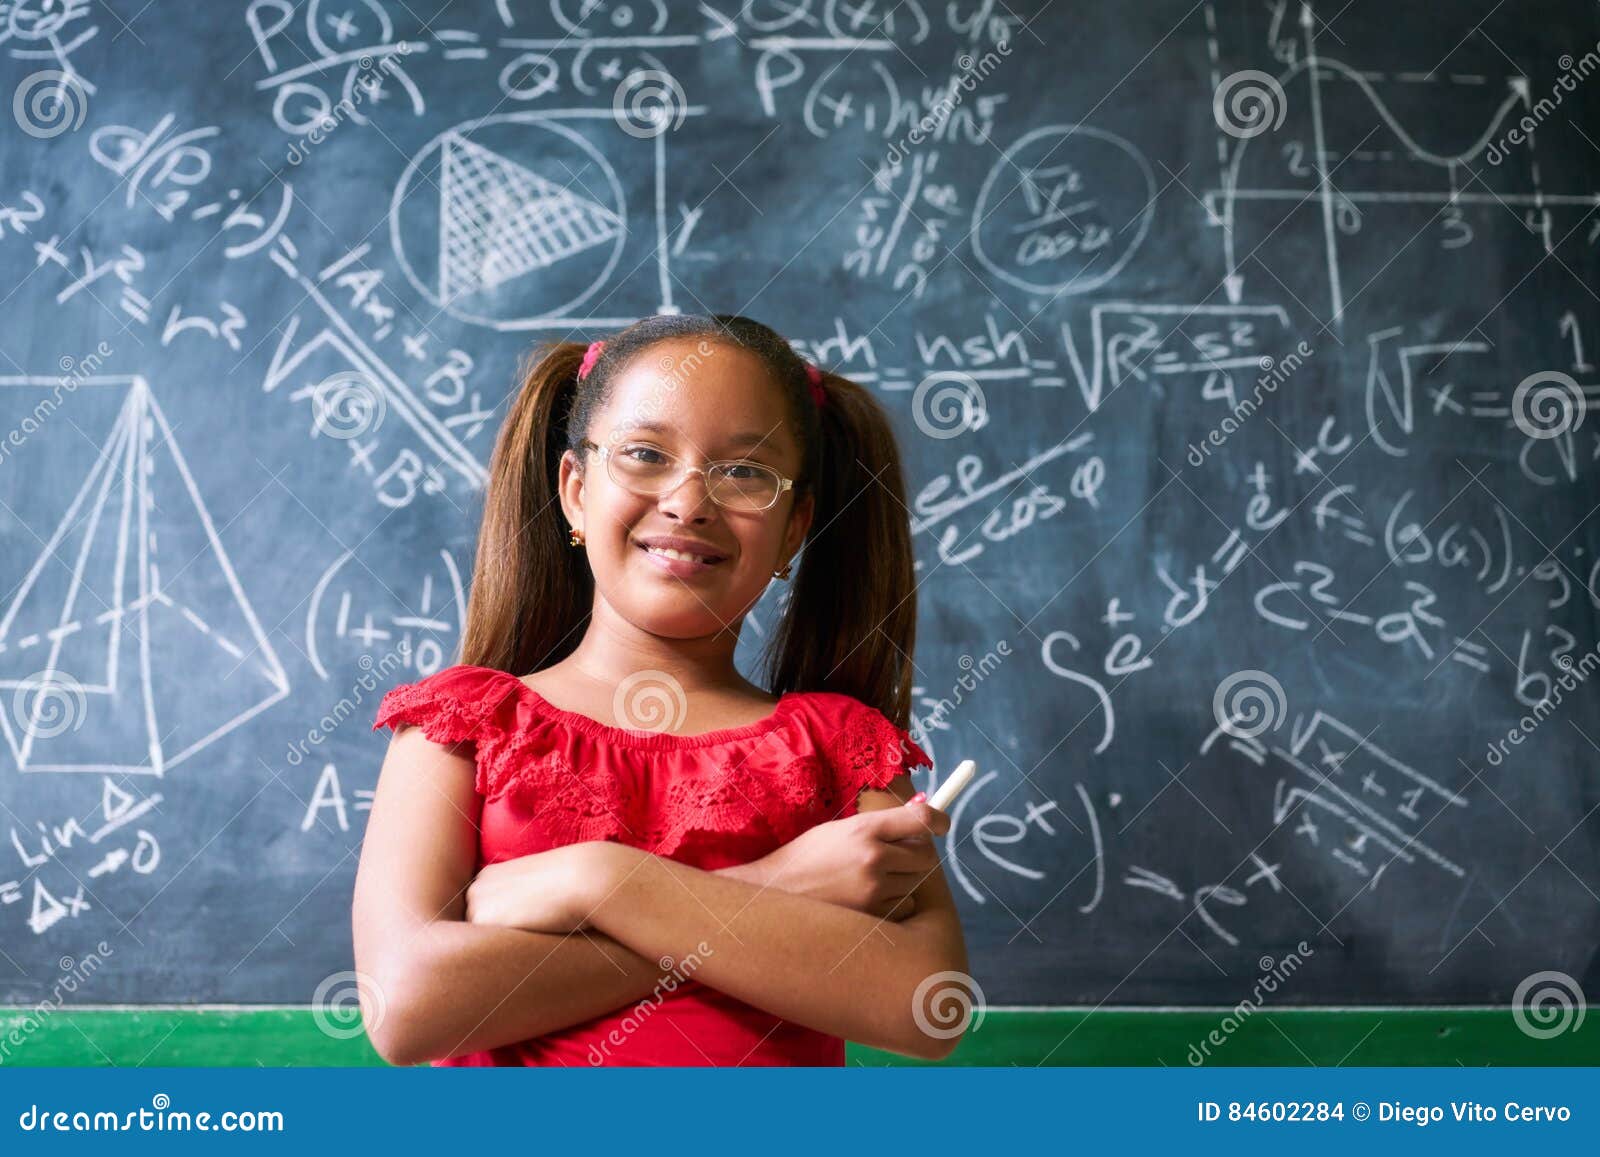 portrait happy girl resolving complex math problem on blackboard